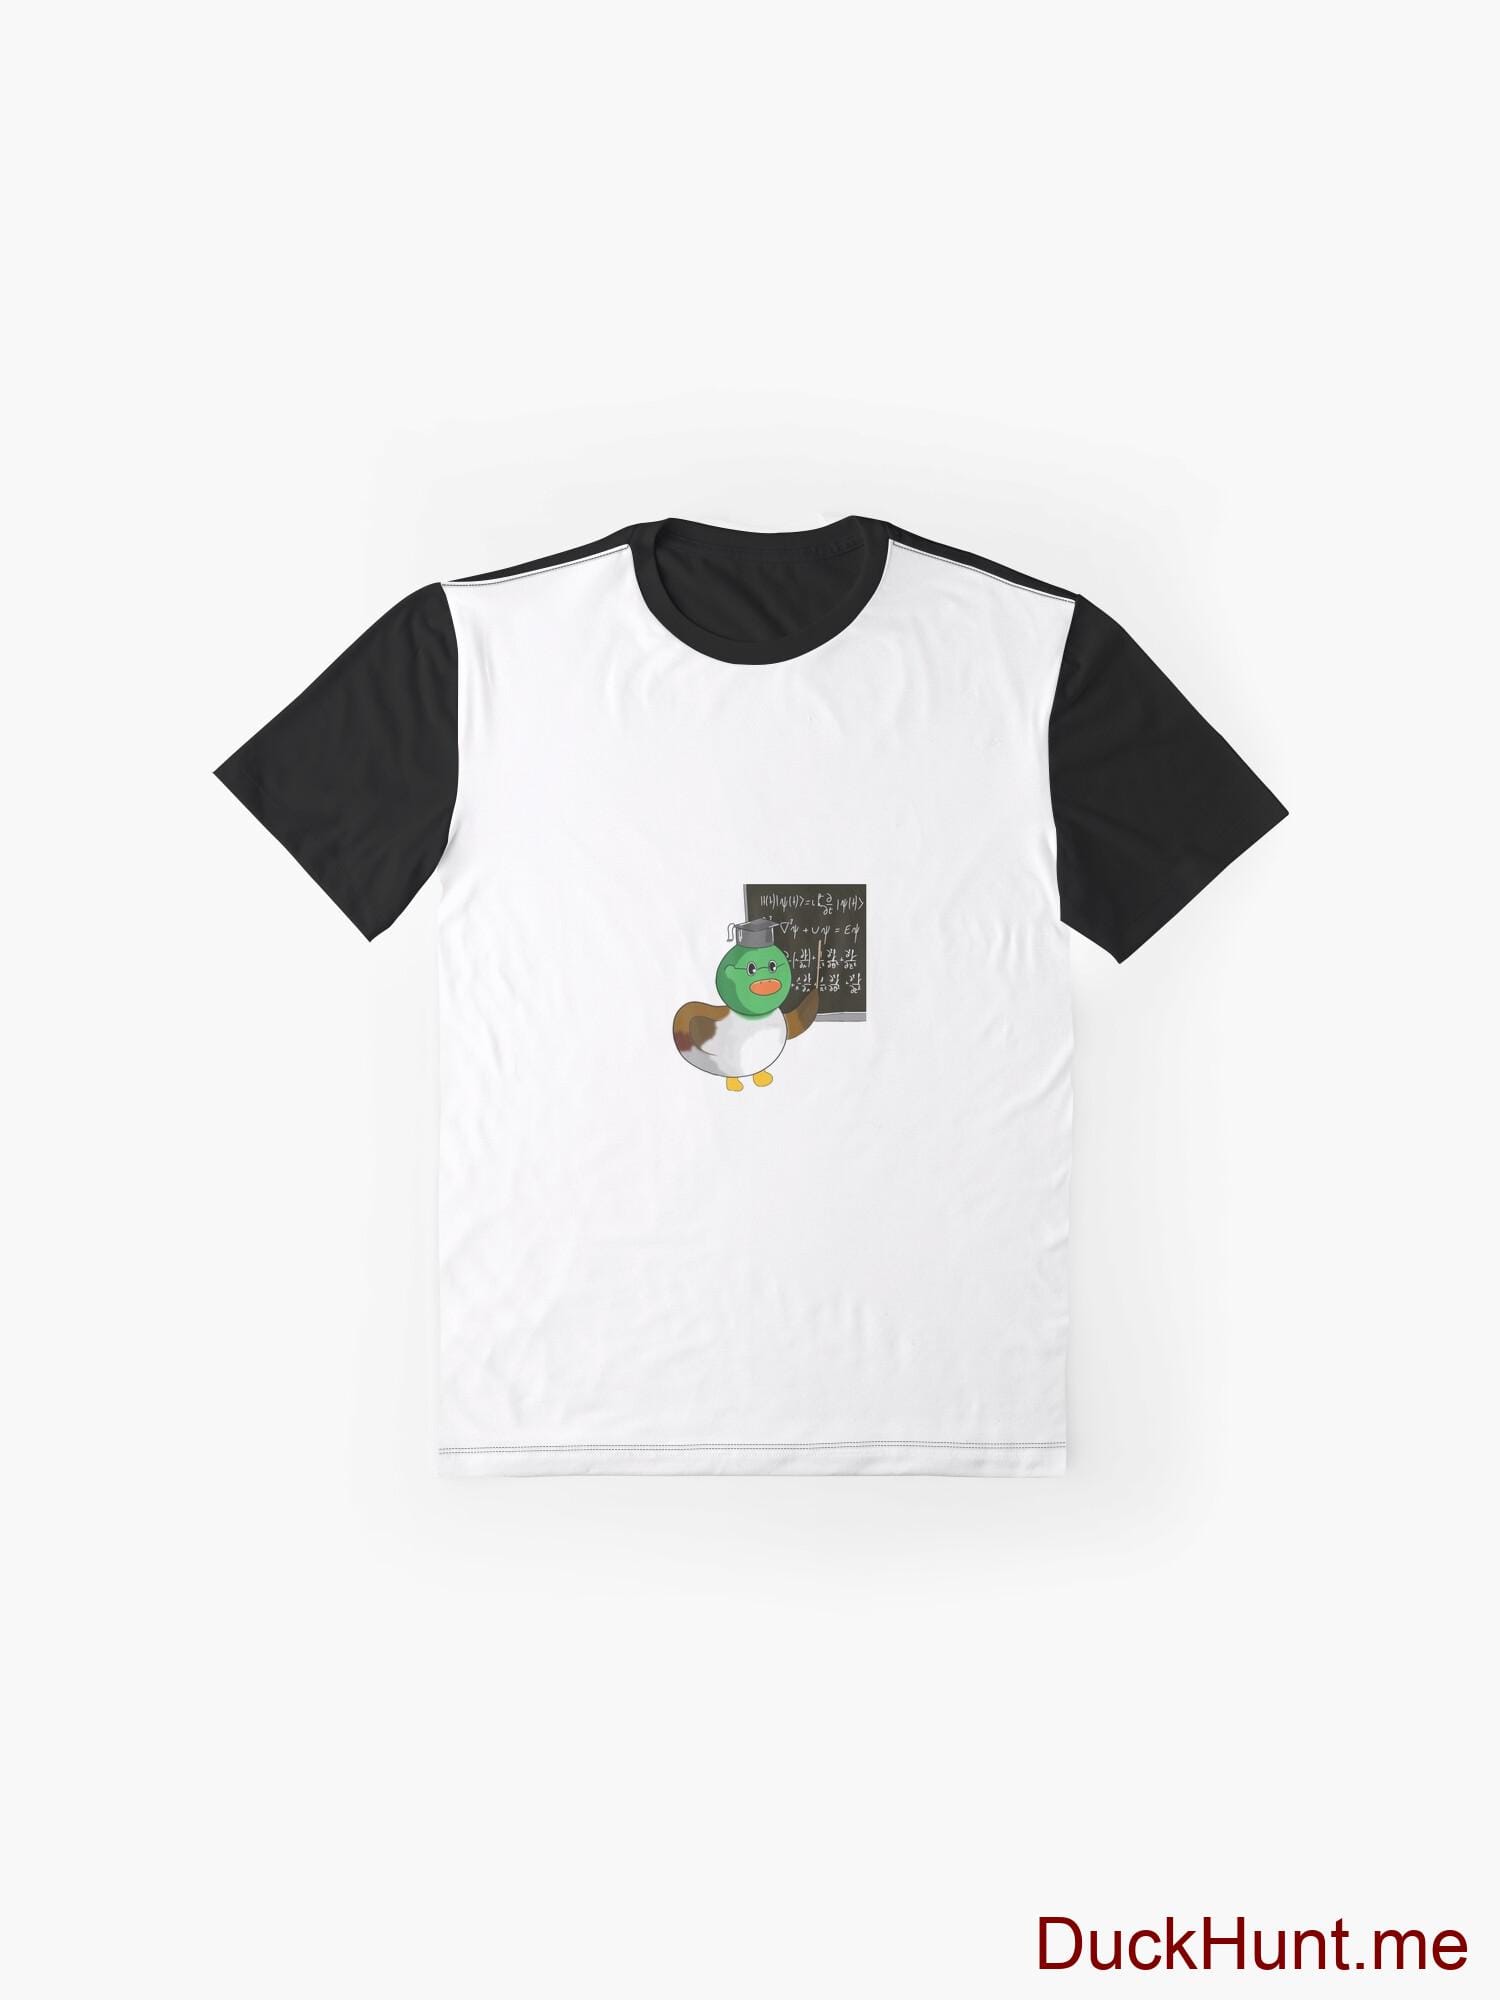 Prof Duck Black Graphic T-Shirt alternative image 3